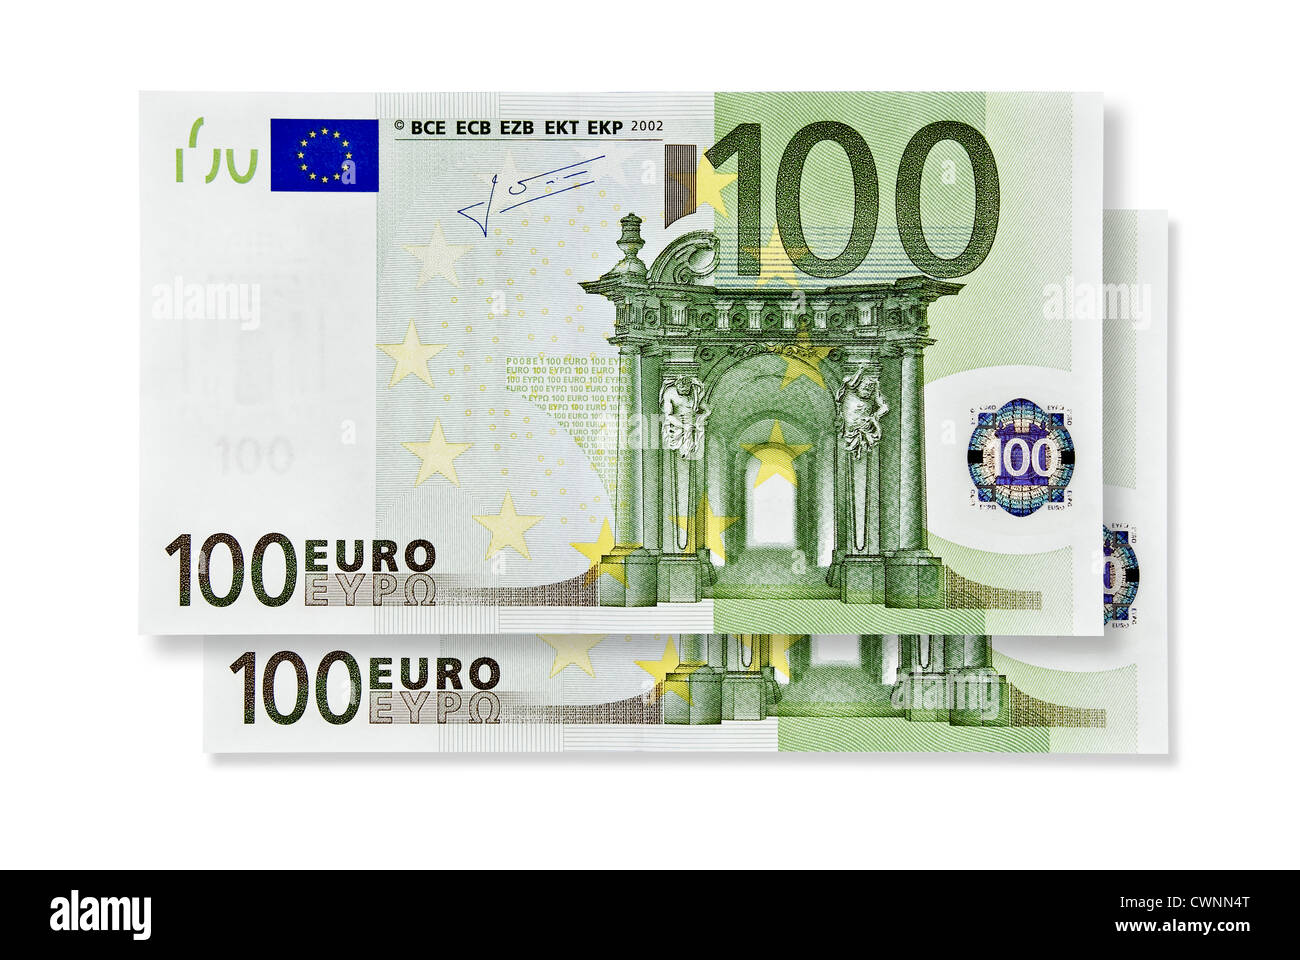 Two 100 Euro banknotes, 200 Euros, european currency, isolated on 100% white background Stock Photo